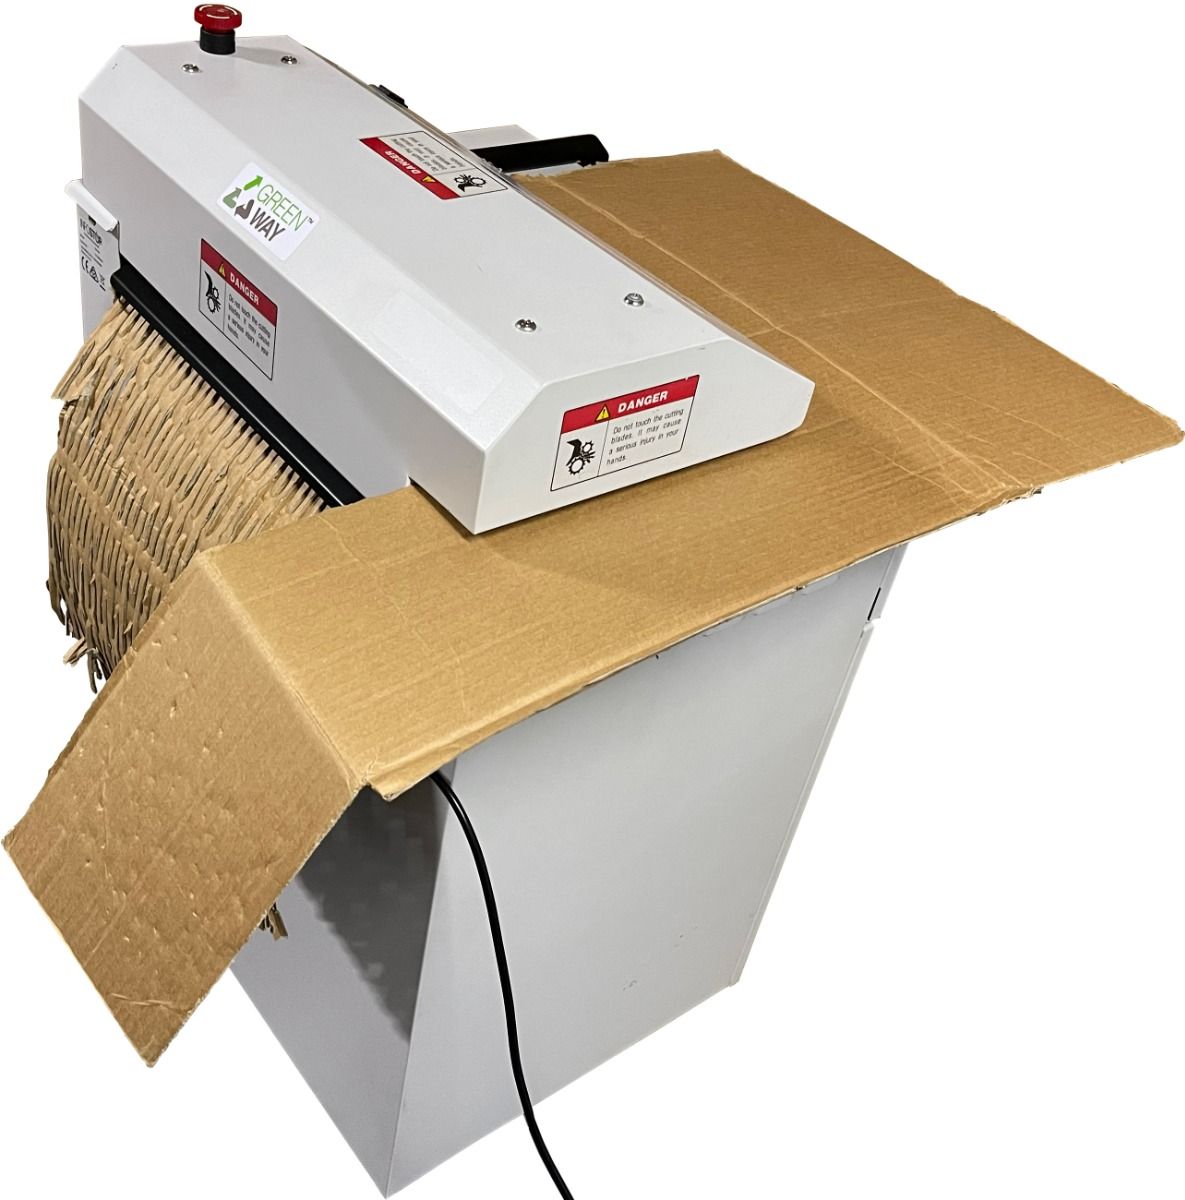 GreenWay Cardboard Perforator